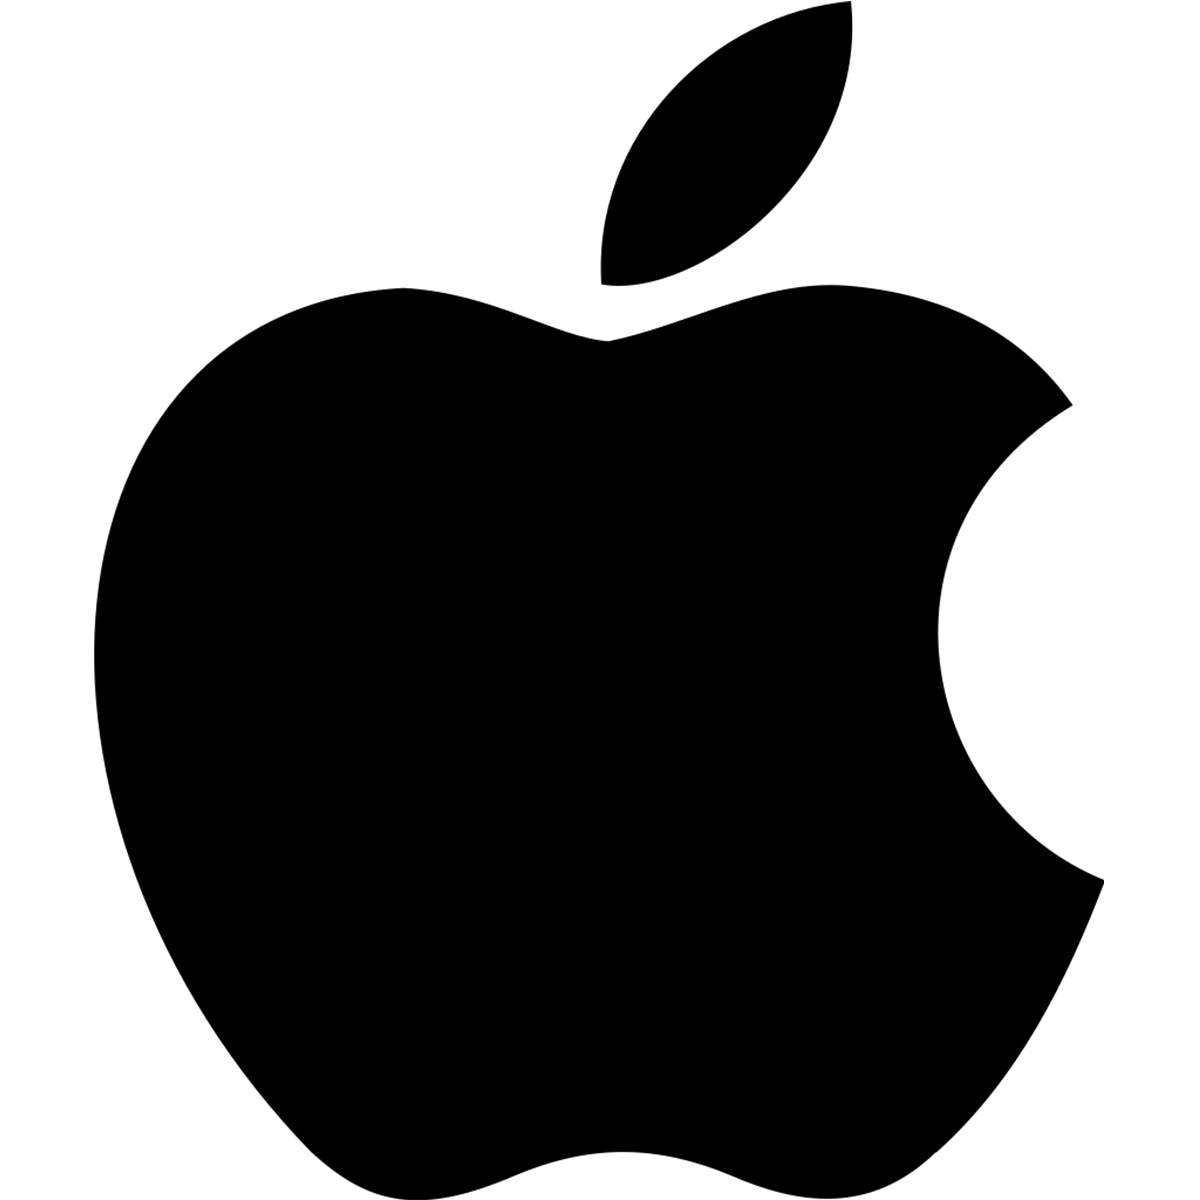 Apple-logo-black-and-white